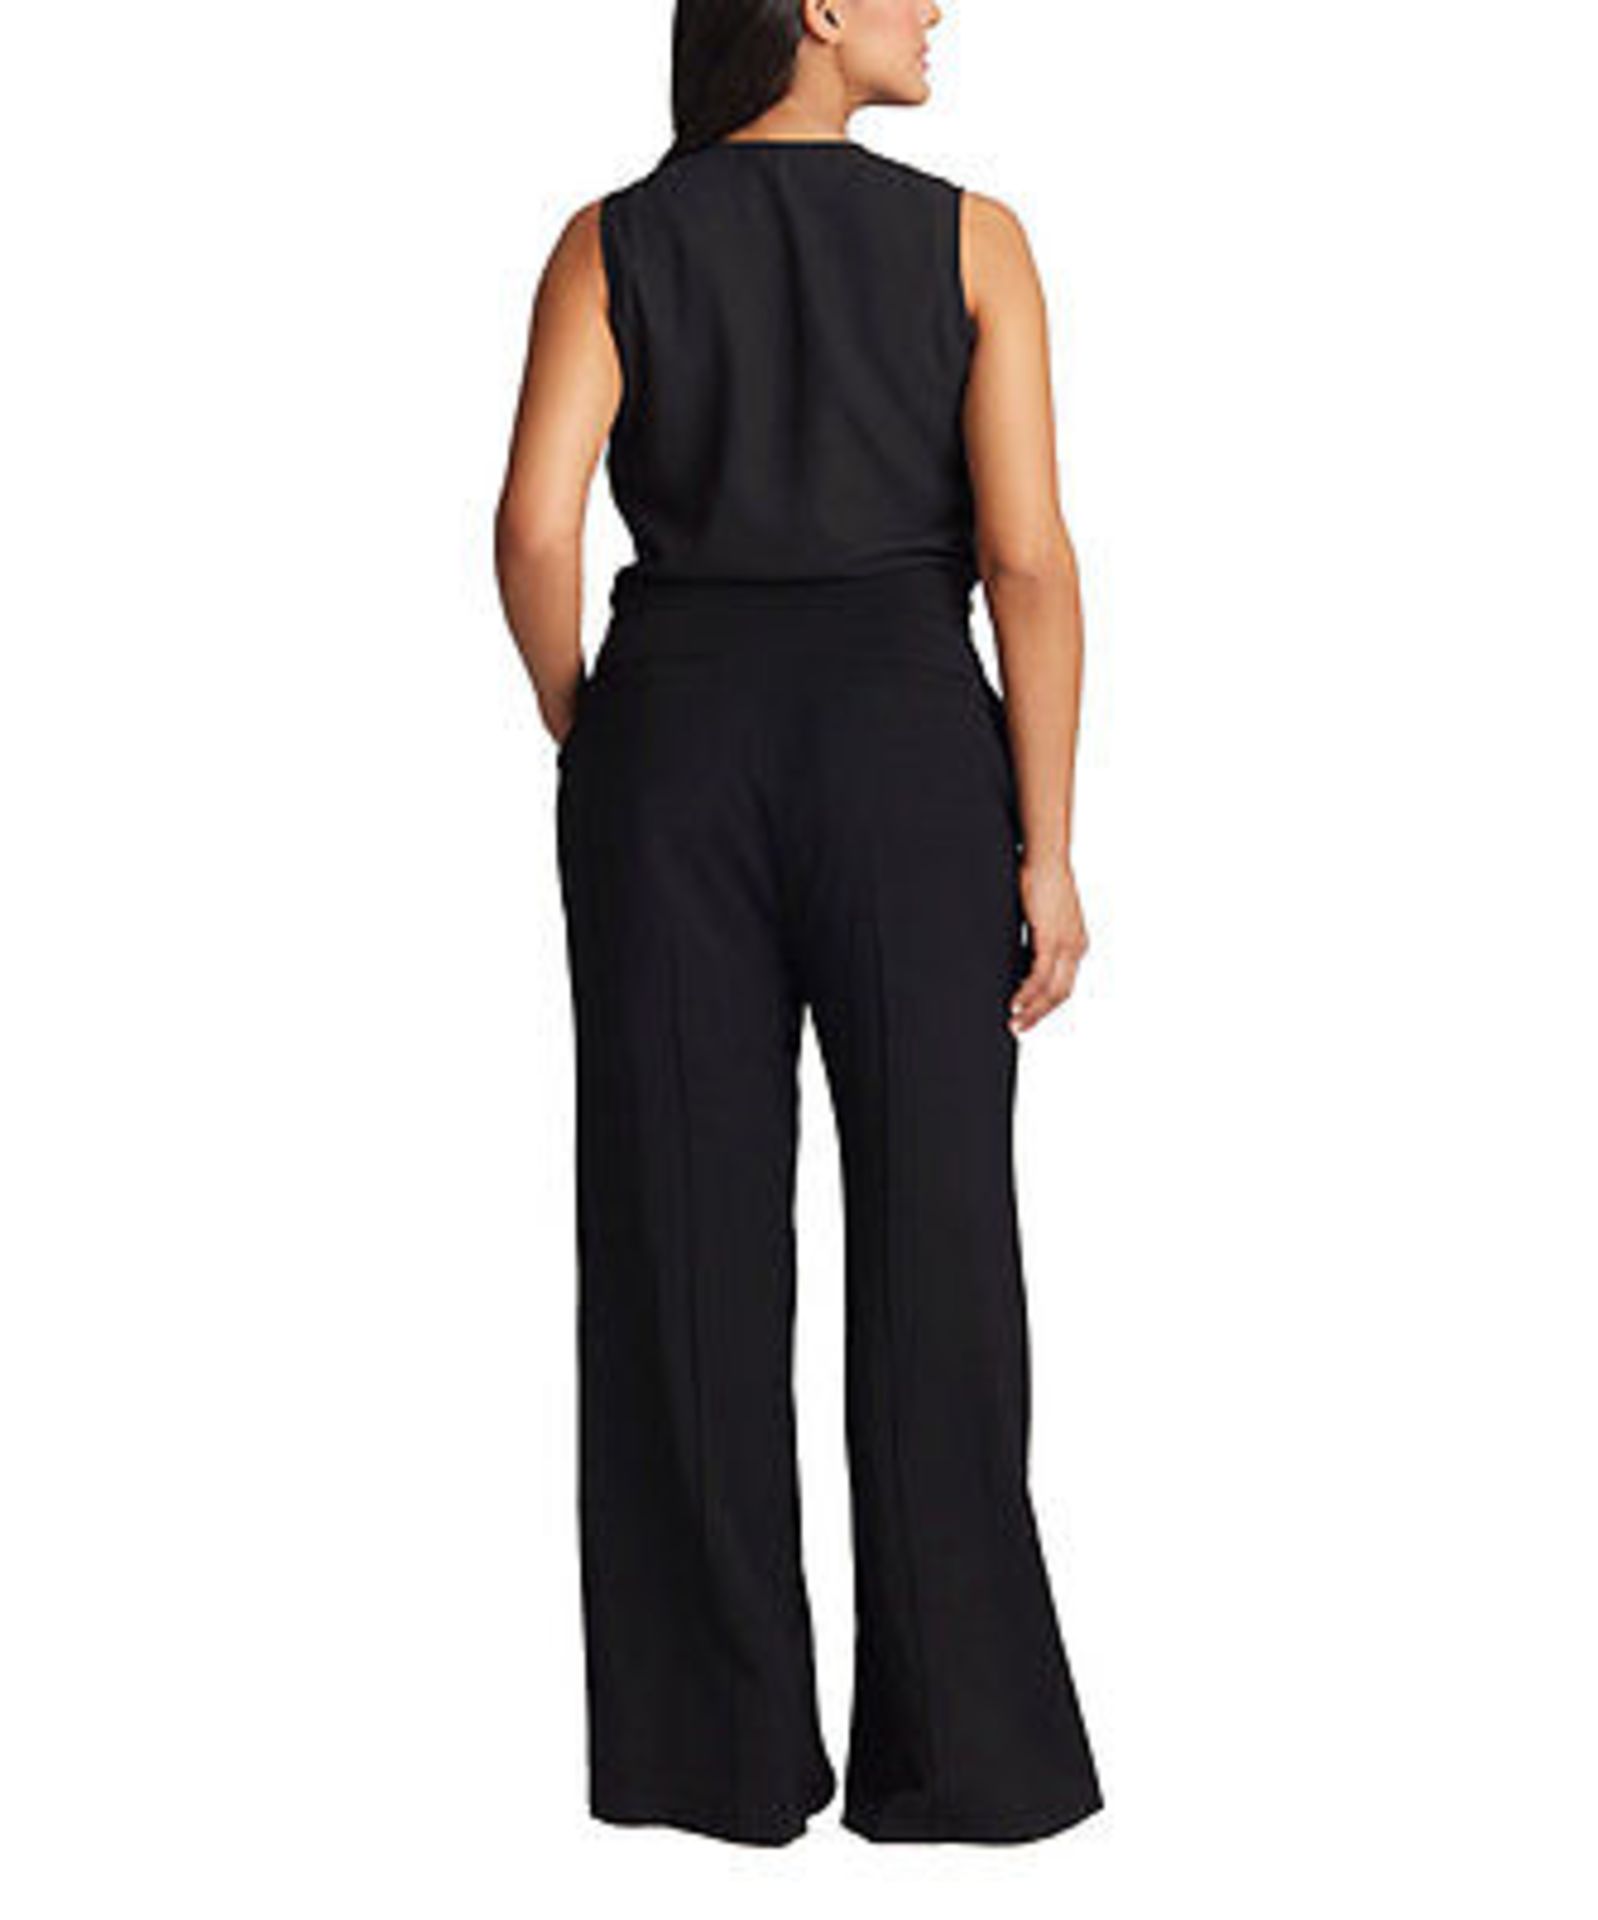 Scarlett Black Pocket Surplice Jumpsuit (US 18/UK 22/EU 50) (New with tags) [Ref: 41422840- T-18] - Image 2 of 2